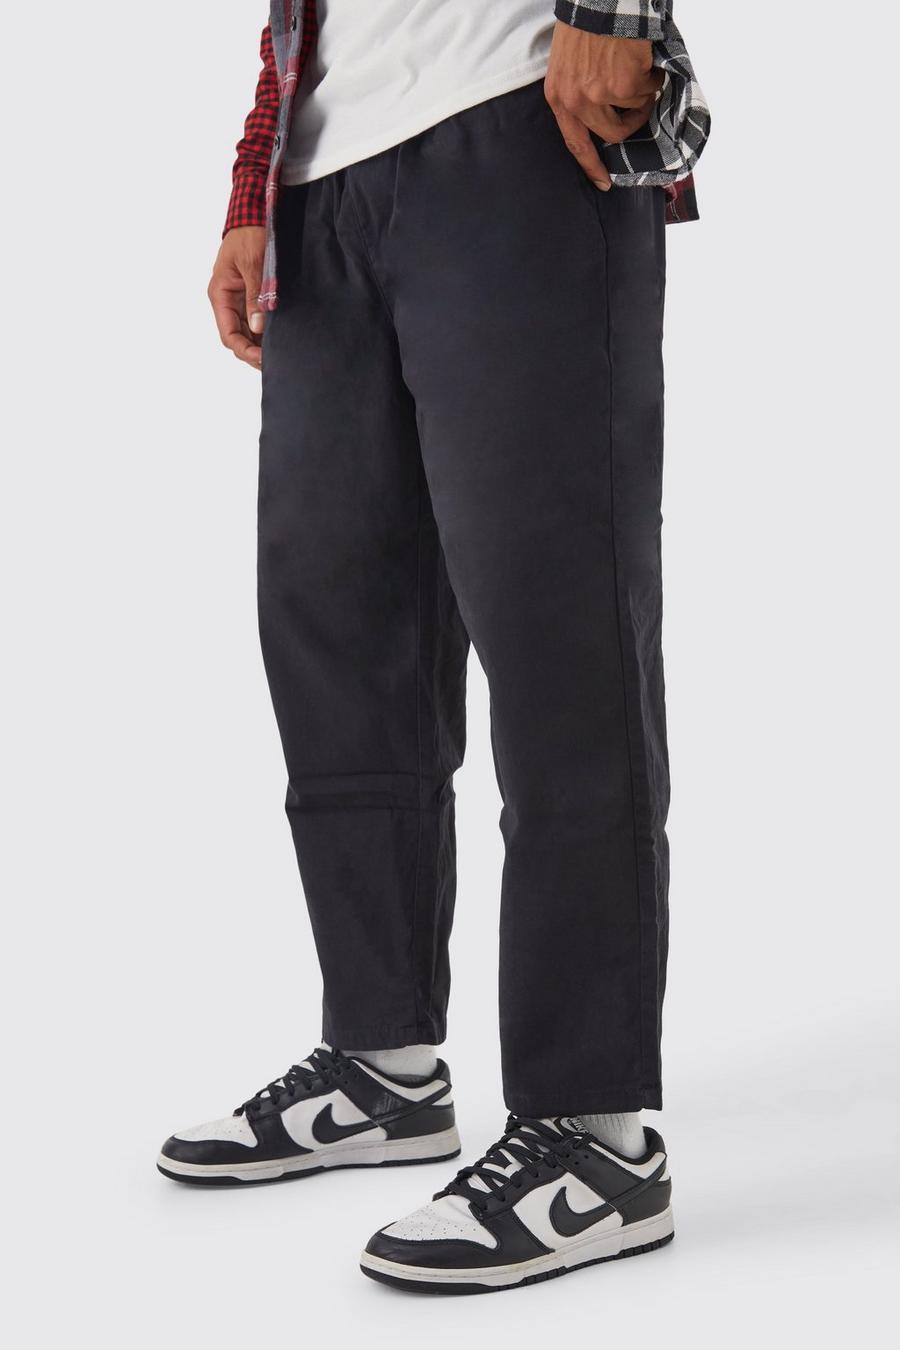 Pantalón chino estilo skate con cintura elástica, Black nero